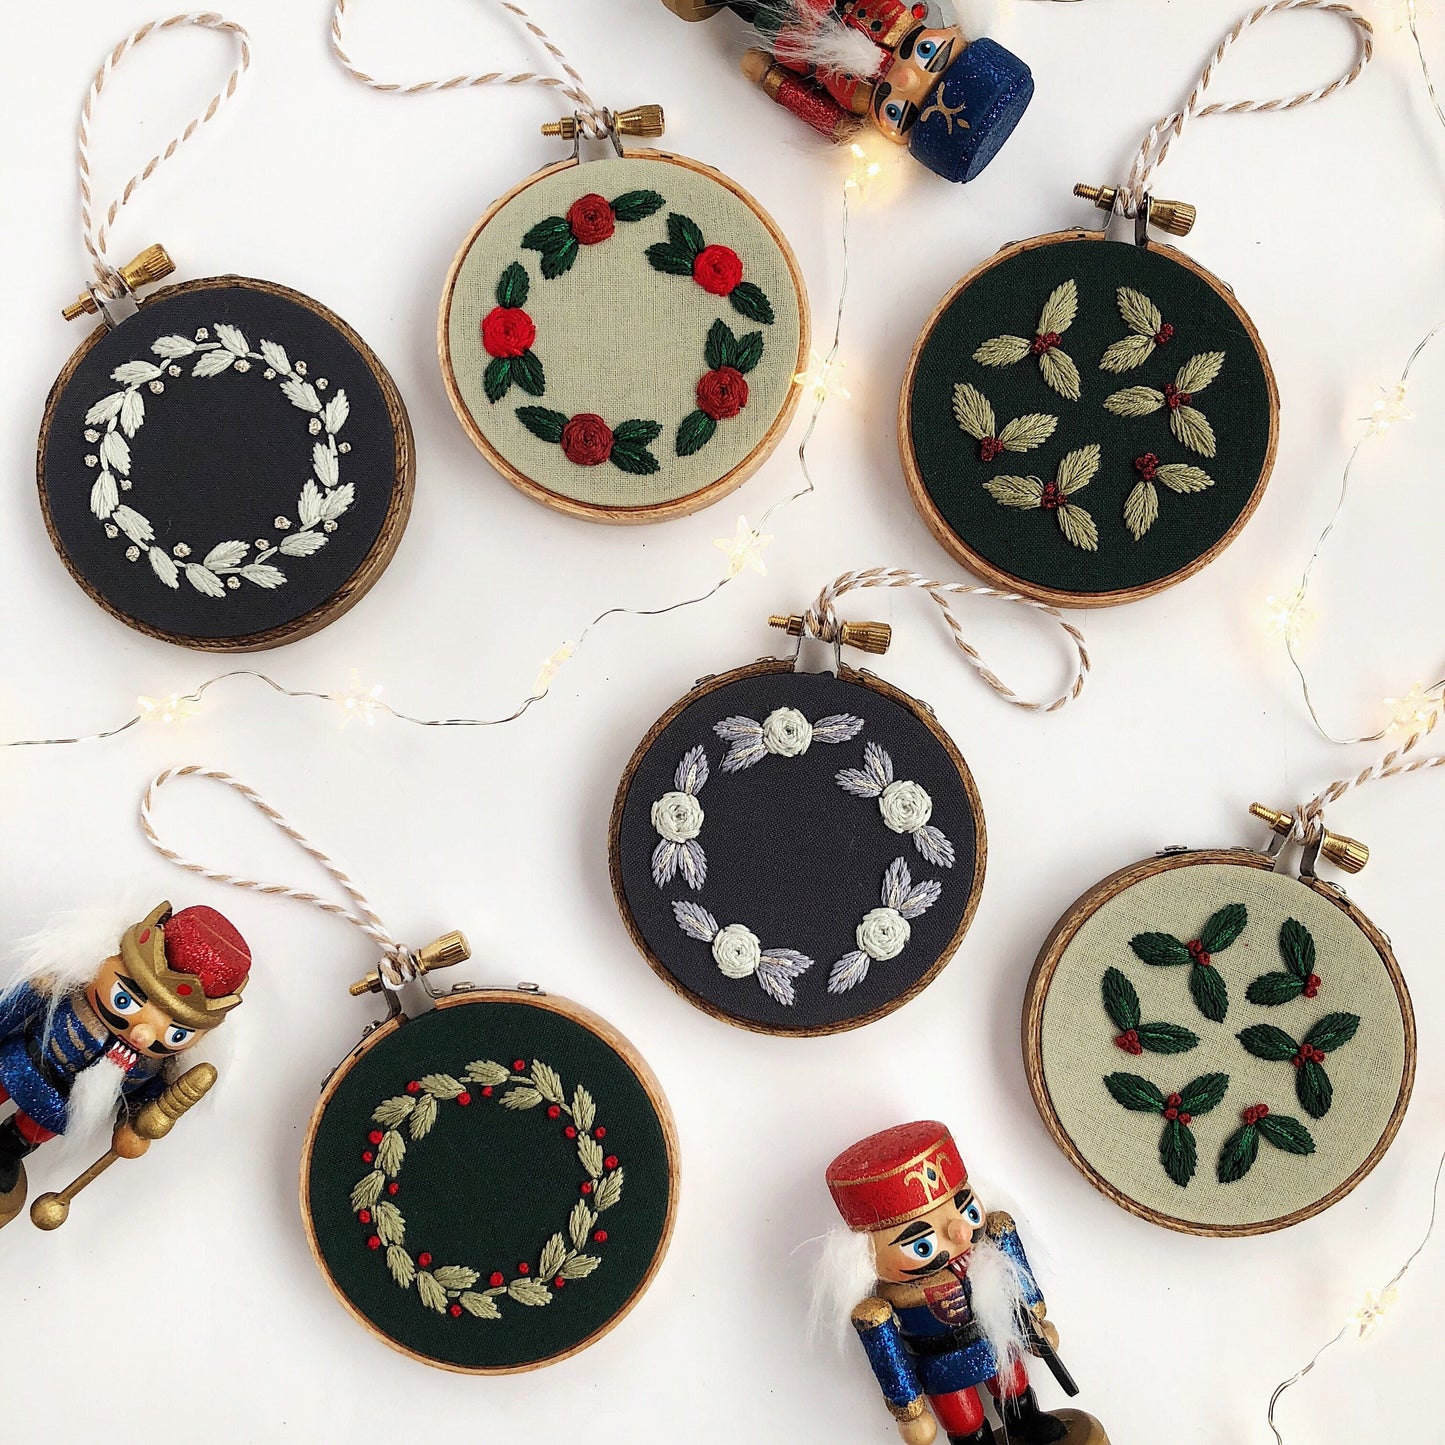 Leafy Christmas Ornament Trio Embroidery Pattern. Beginner Embroidery pattern. PDF Digital Download. DIY Christmas decor. Christmas ornament